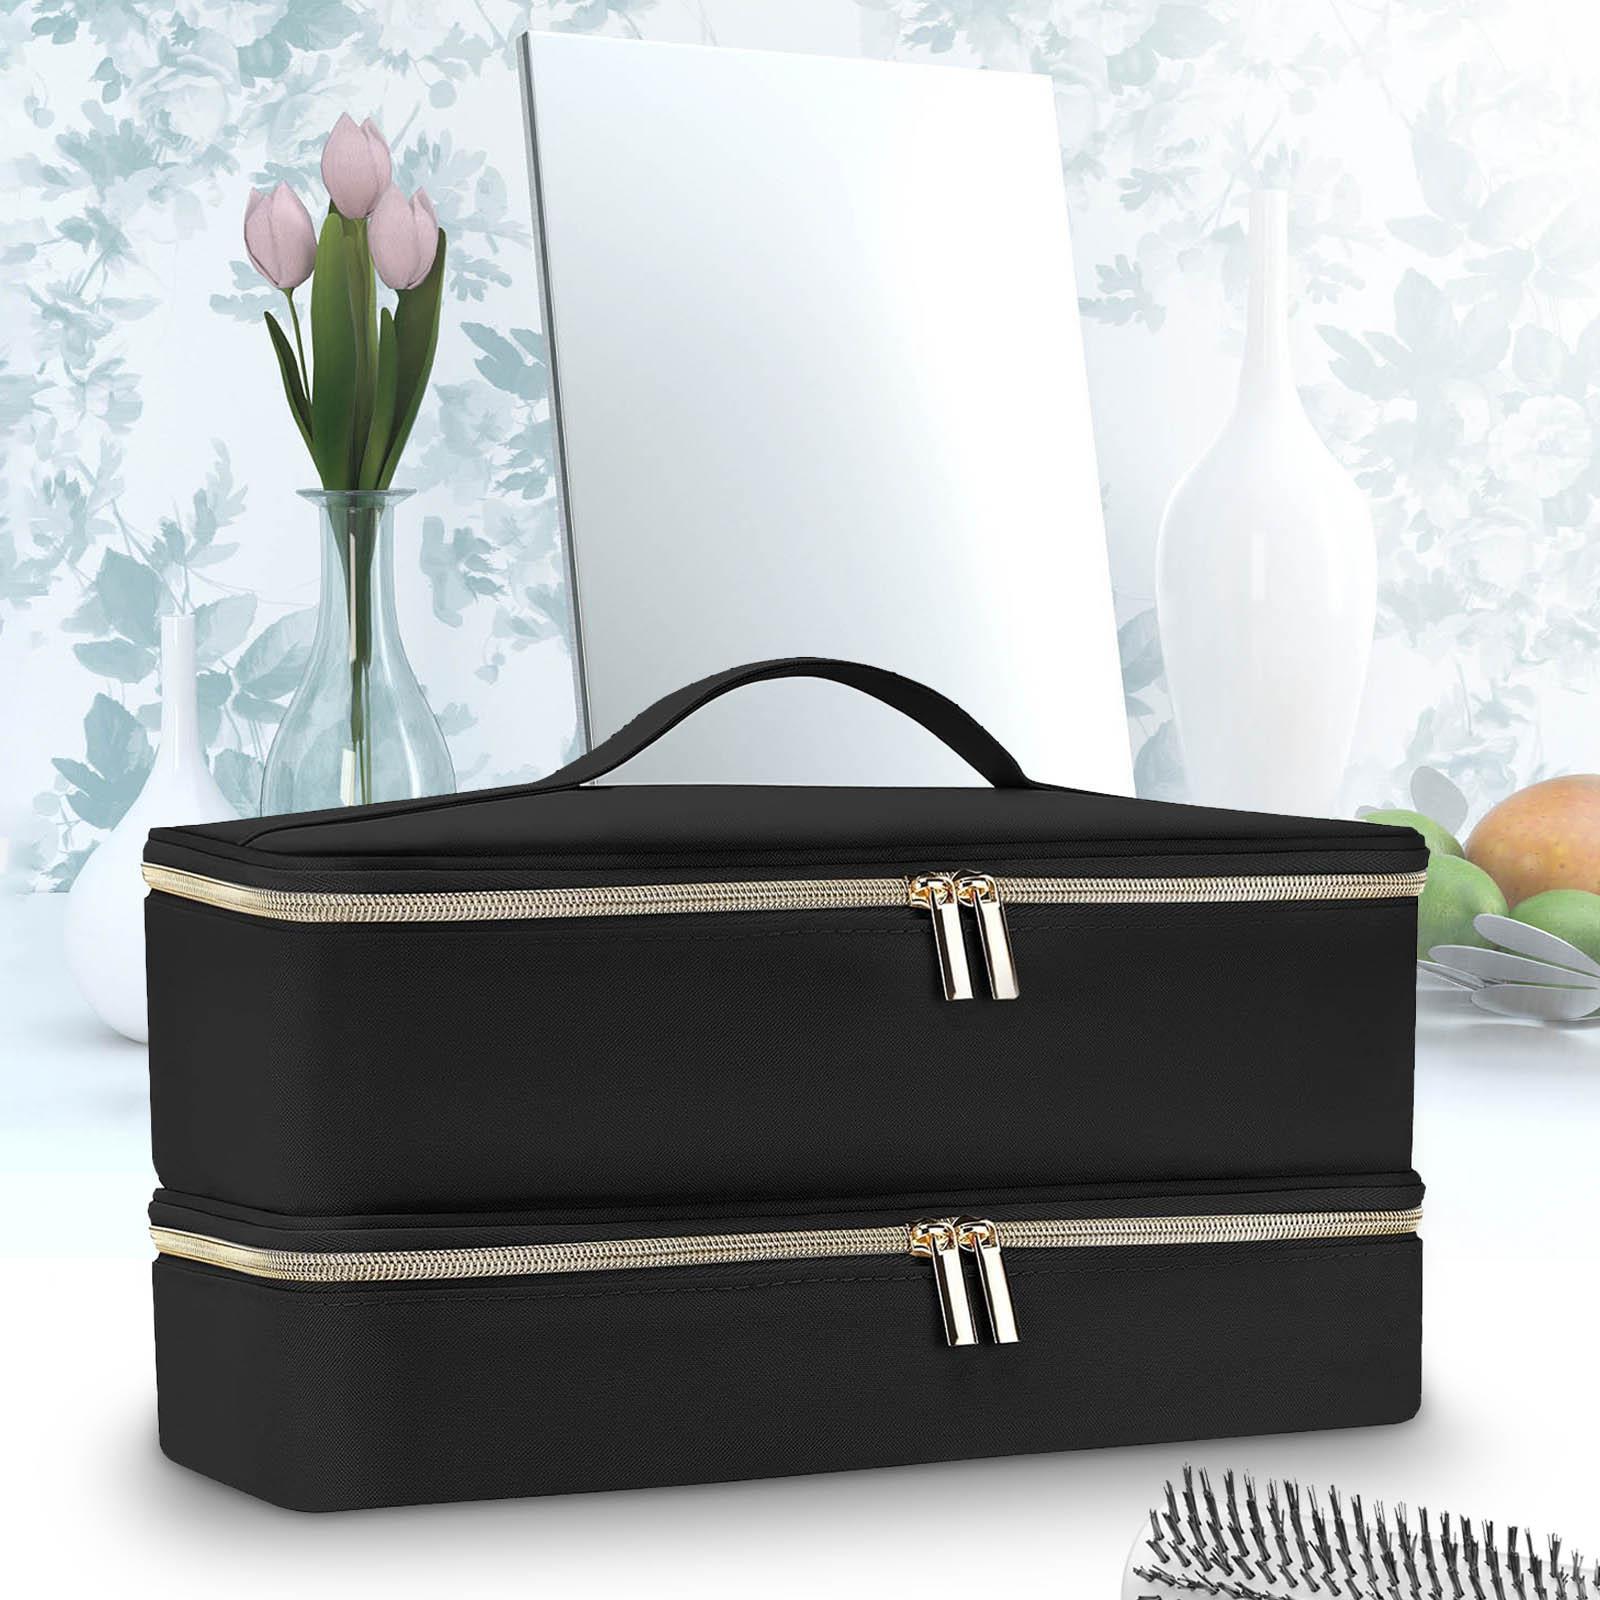 Hair Dryer Bags Hair Curler Organizer Bag Travel Case for Business Trip Home